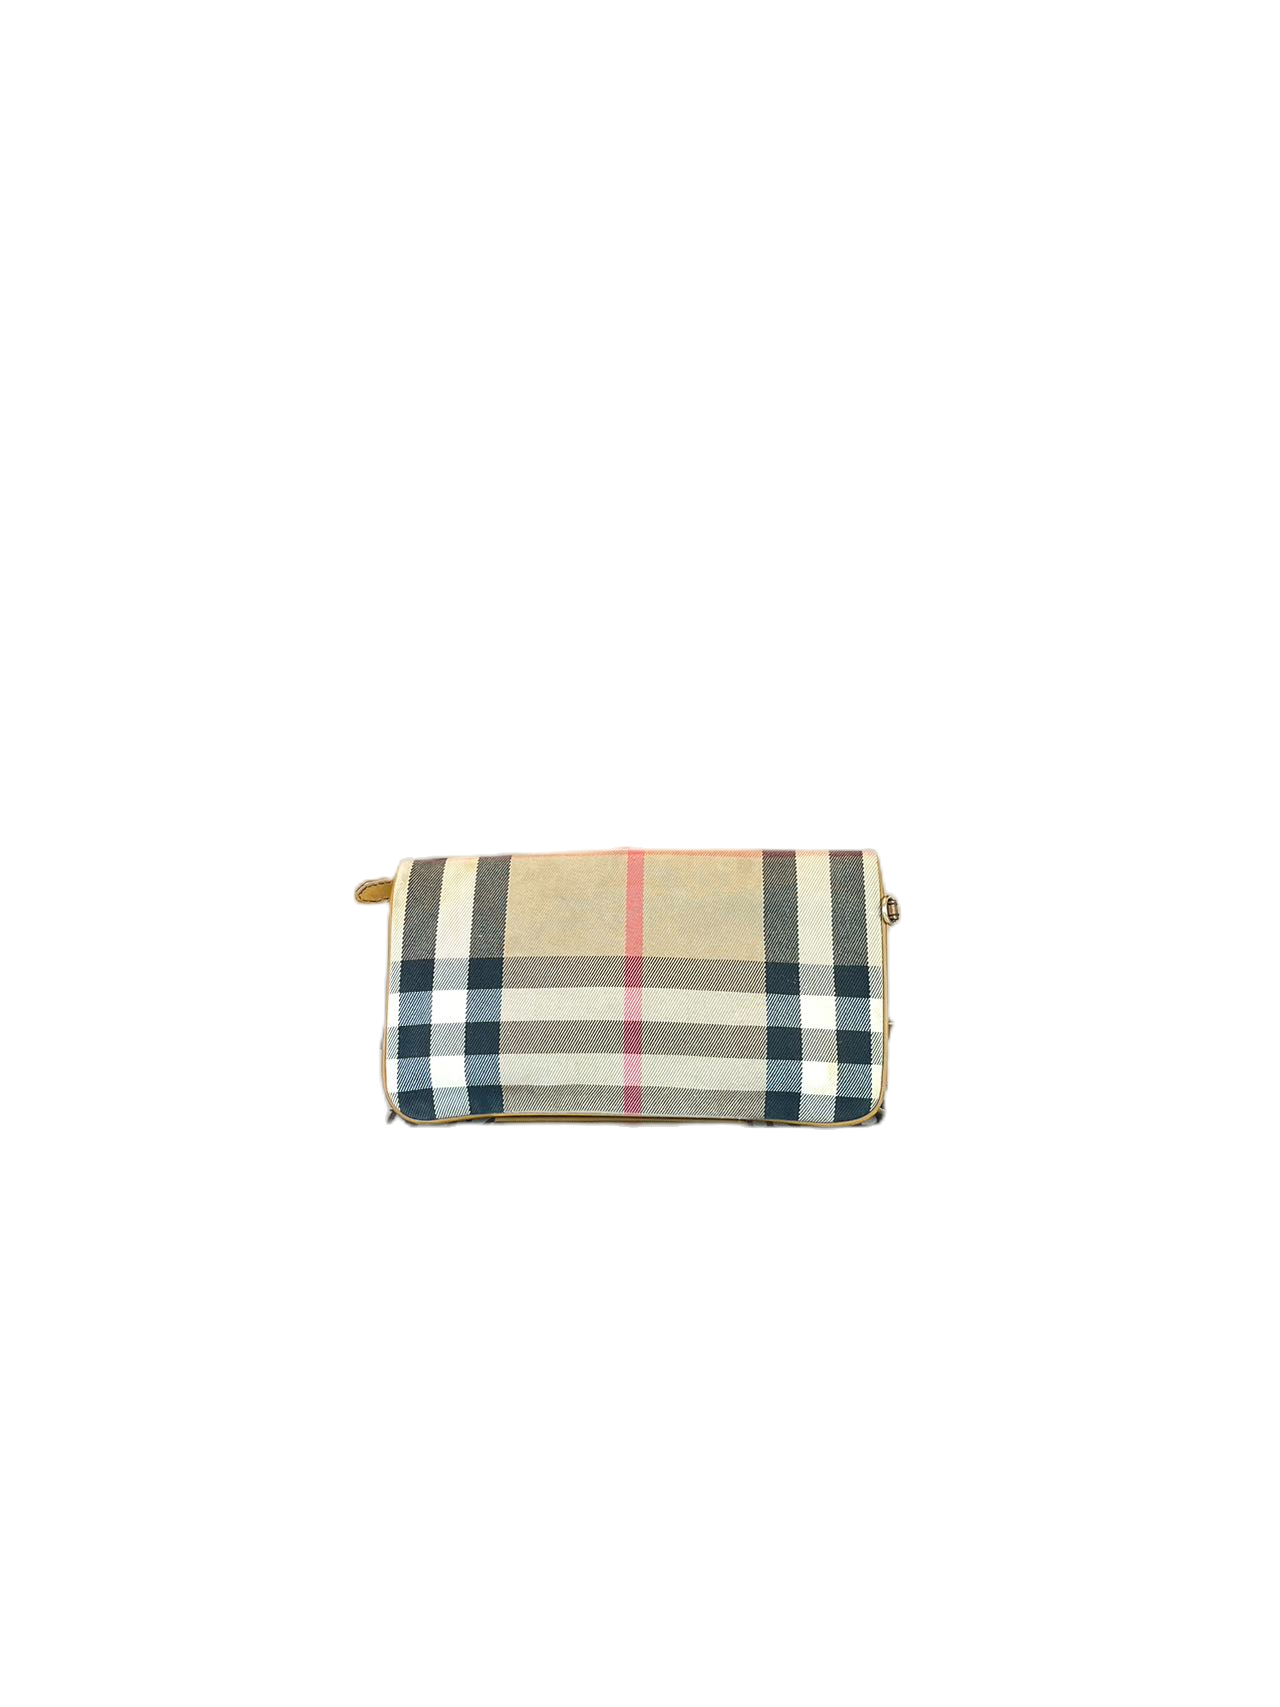 Preloved Burberry Signature Logo Clutches Handbag Pouch